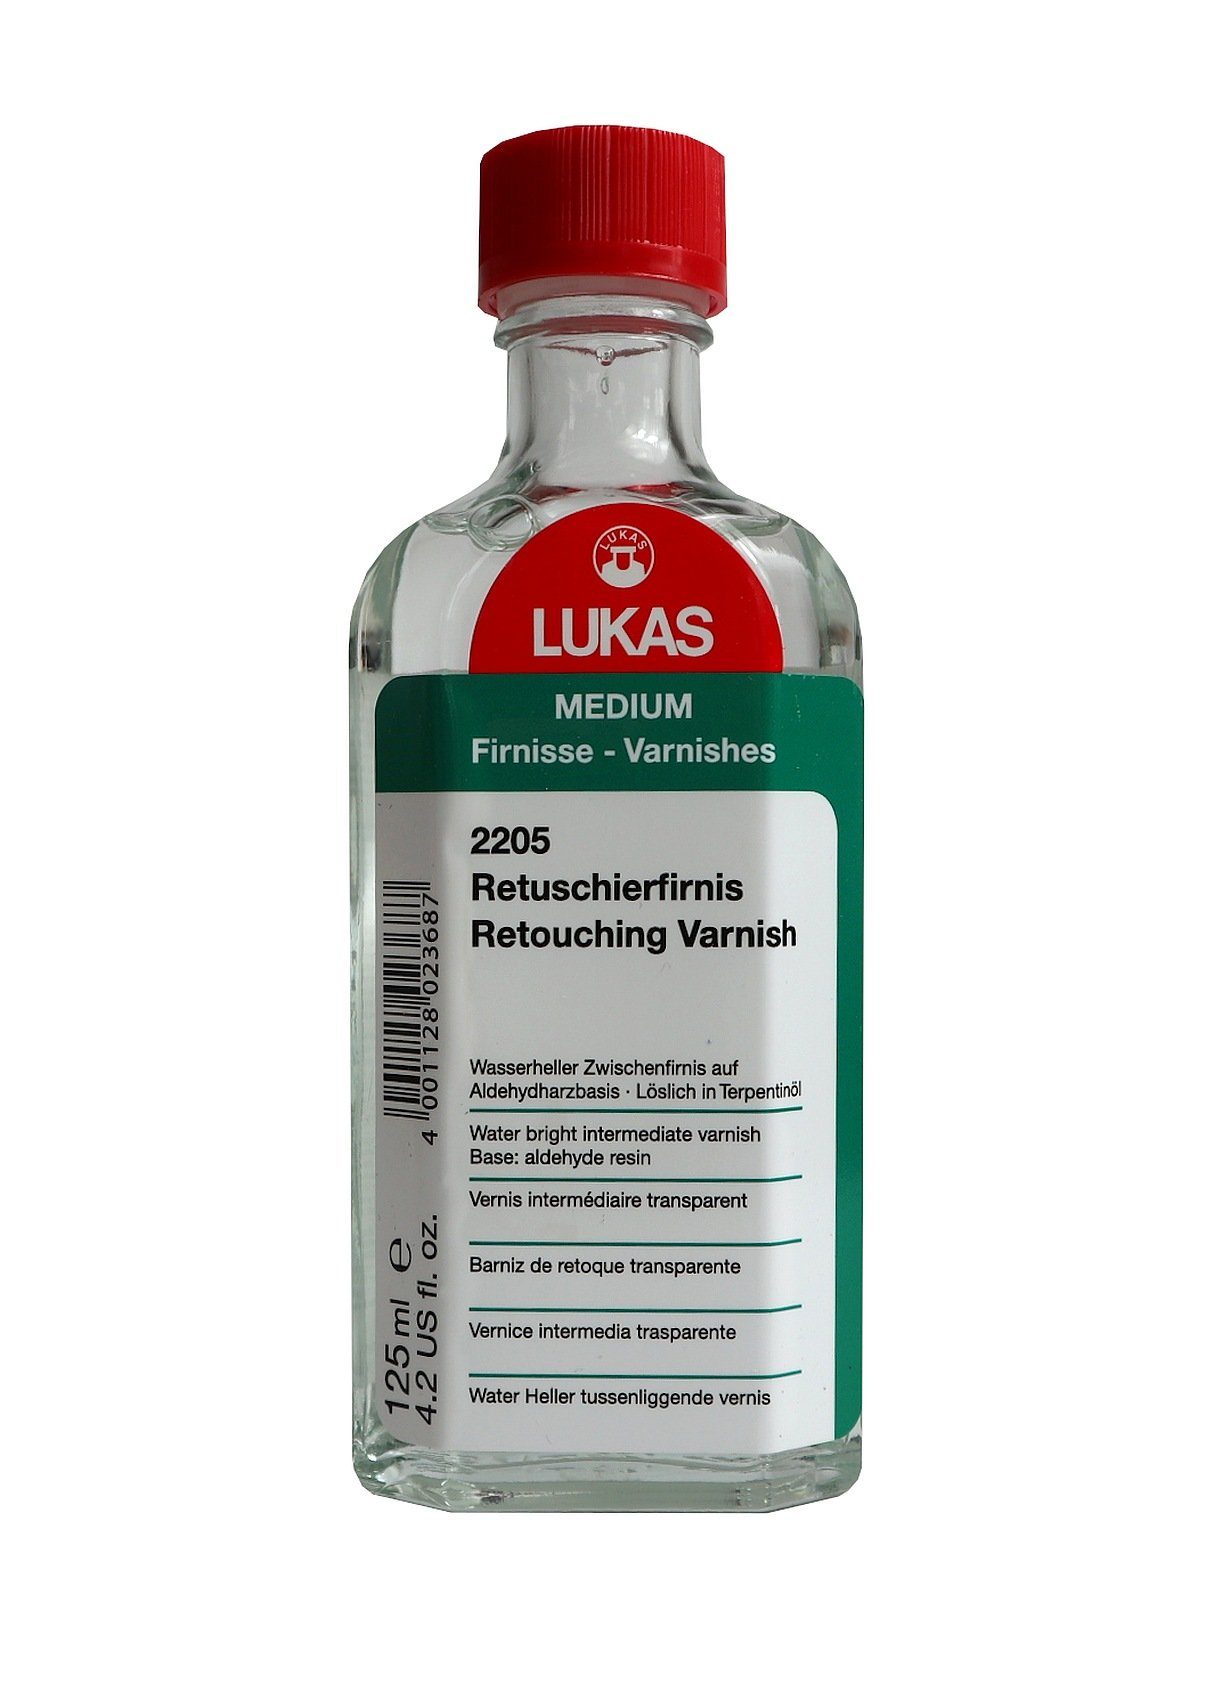 Lukas-Nerchau 125 GmbH Retuschierfirnis - Firnis ml LUKAS